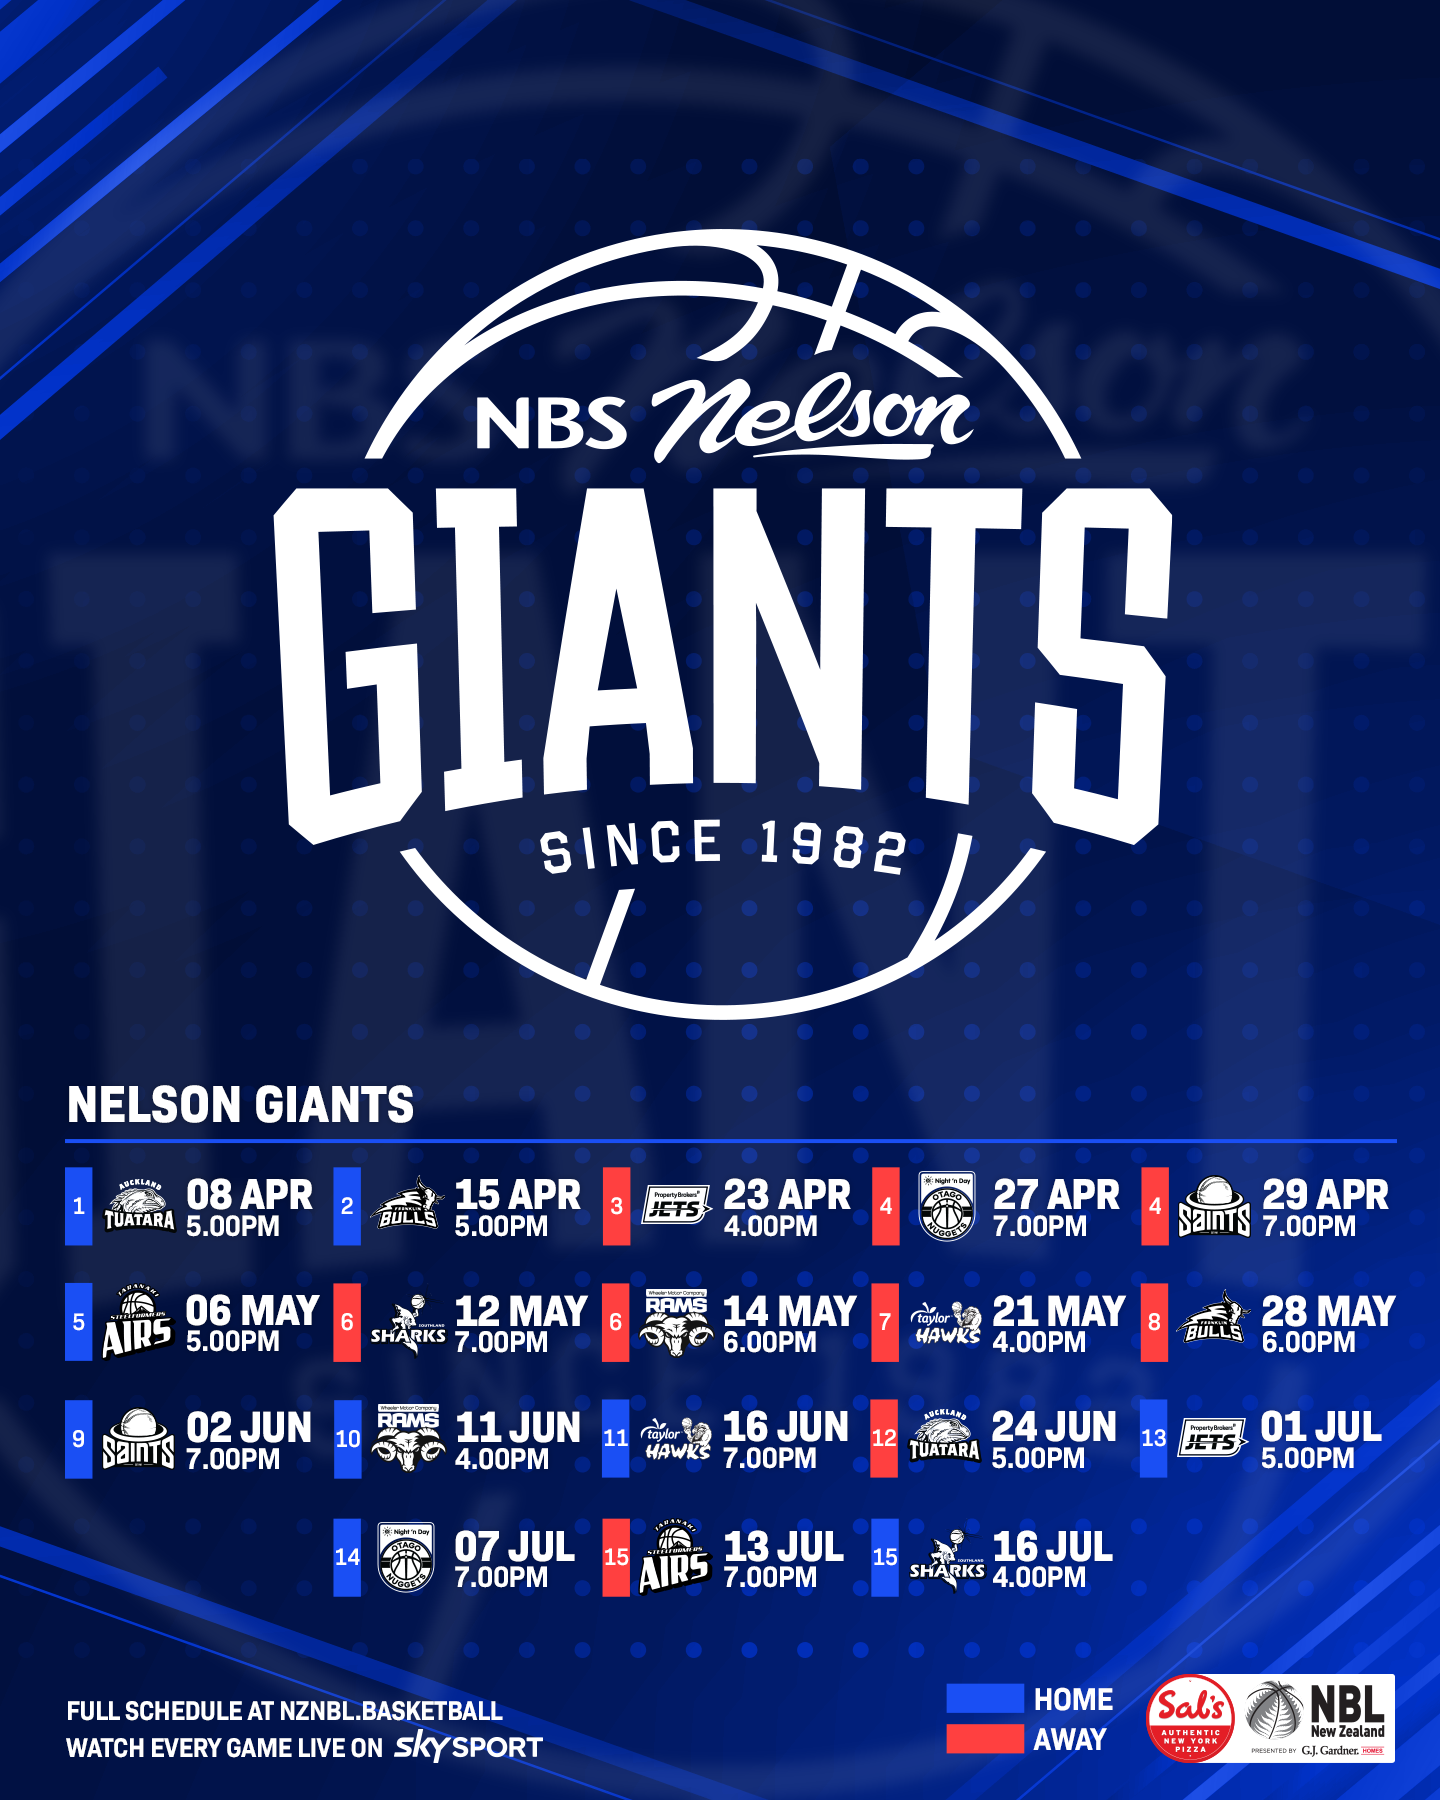 Nelson Giants